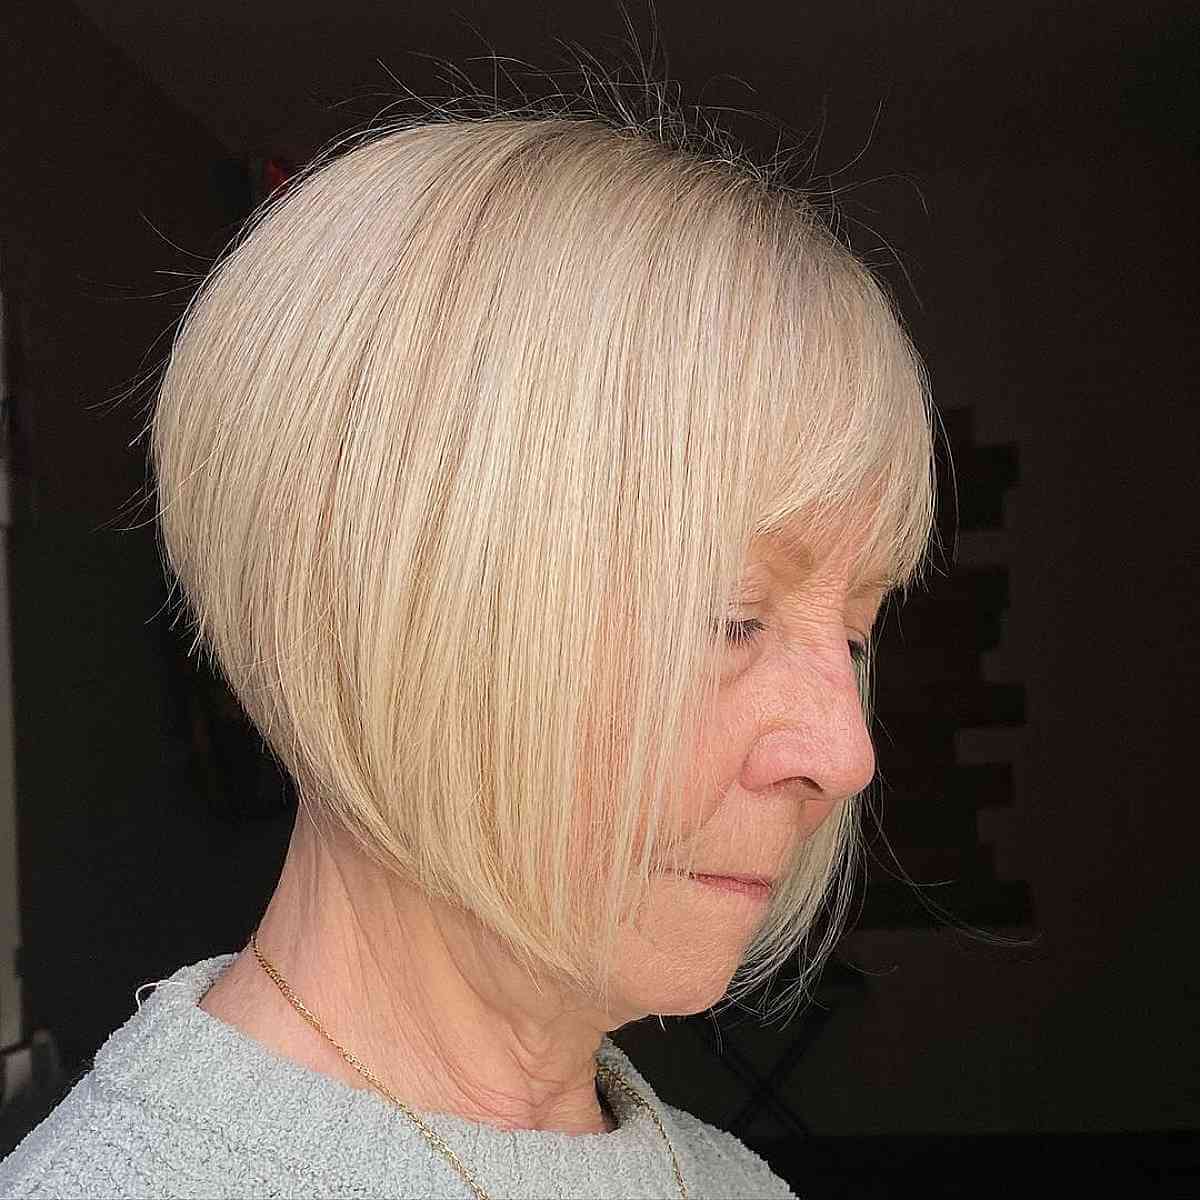 22 No-Fuss, Yet Stylish Short Bob Haircuts for Women Over 70